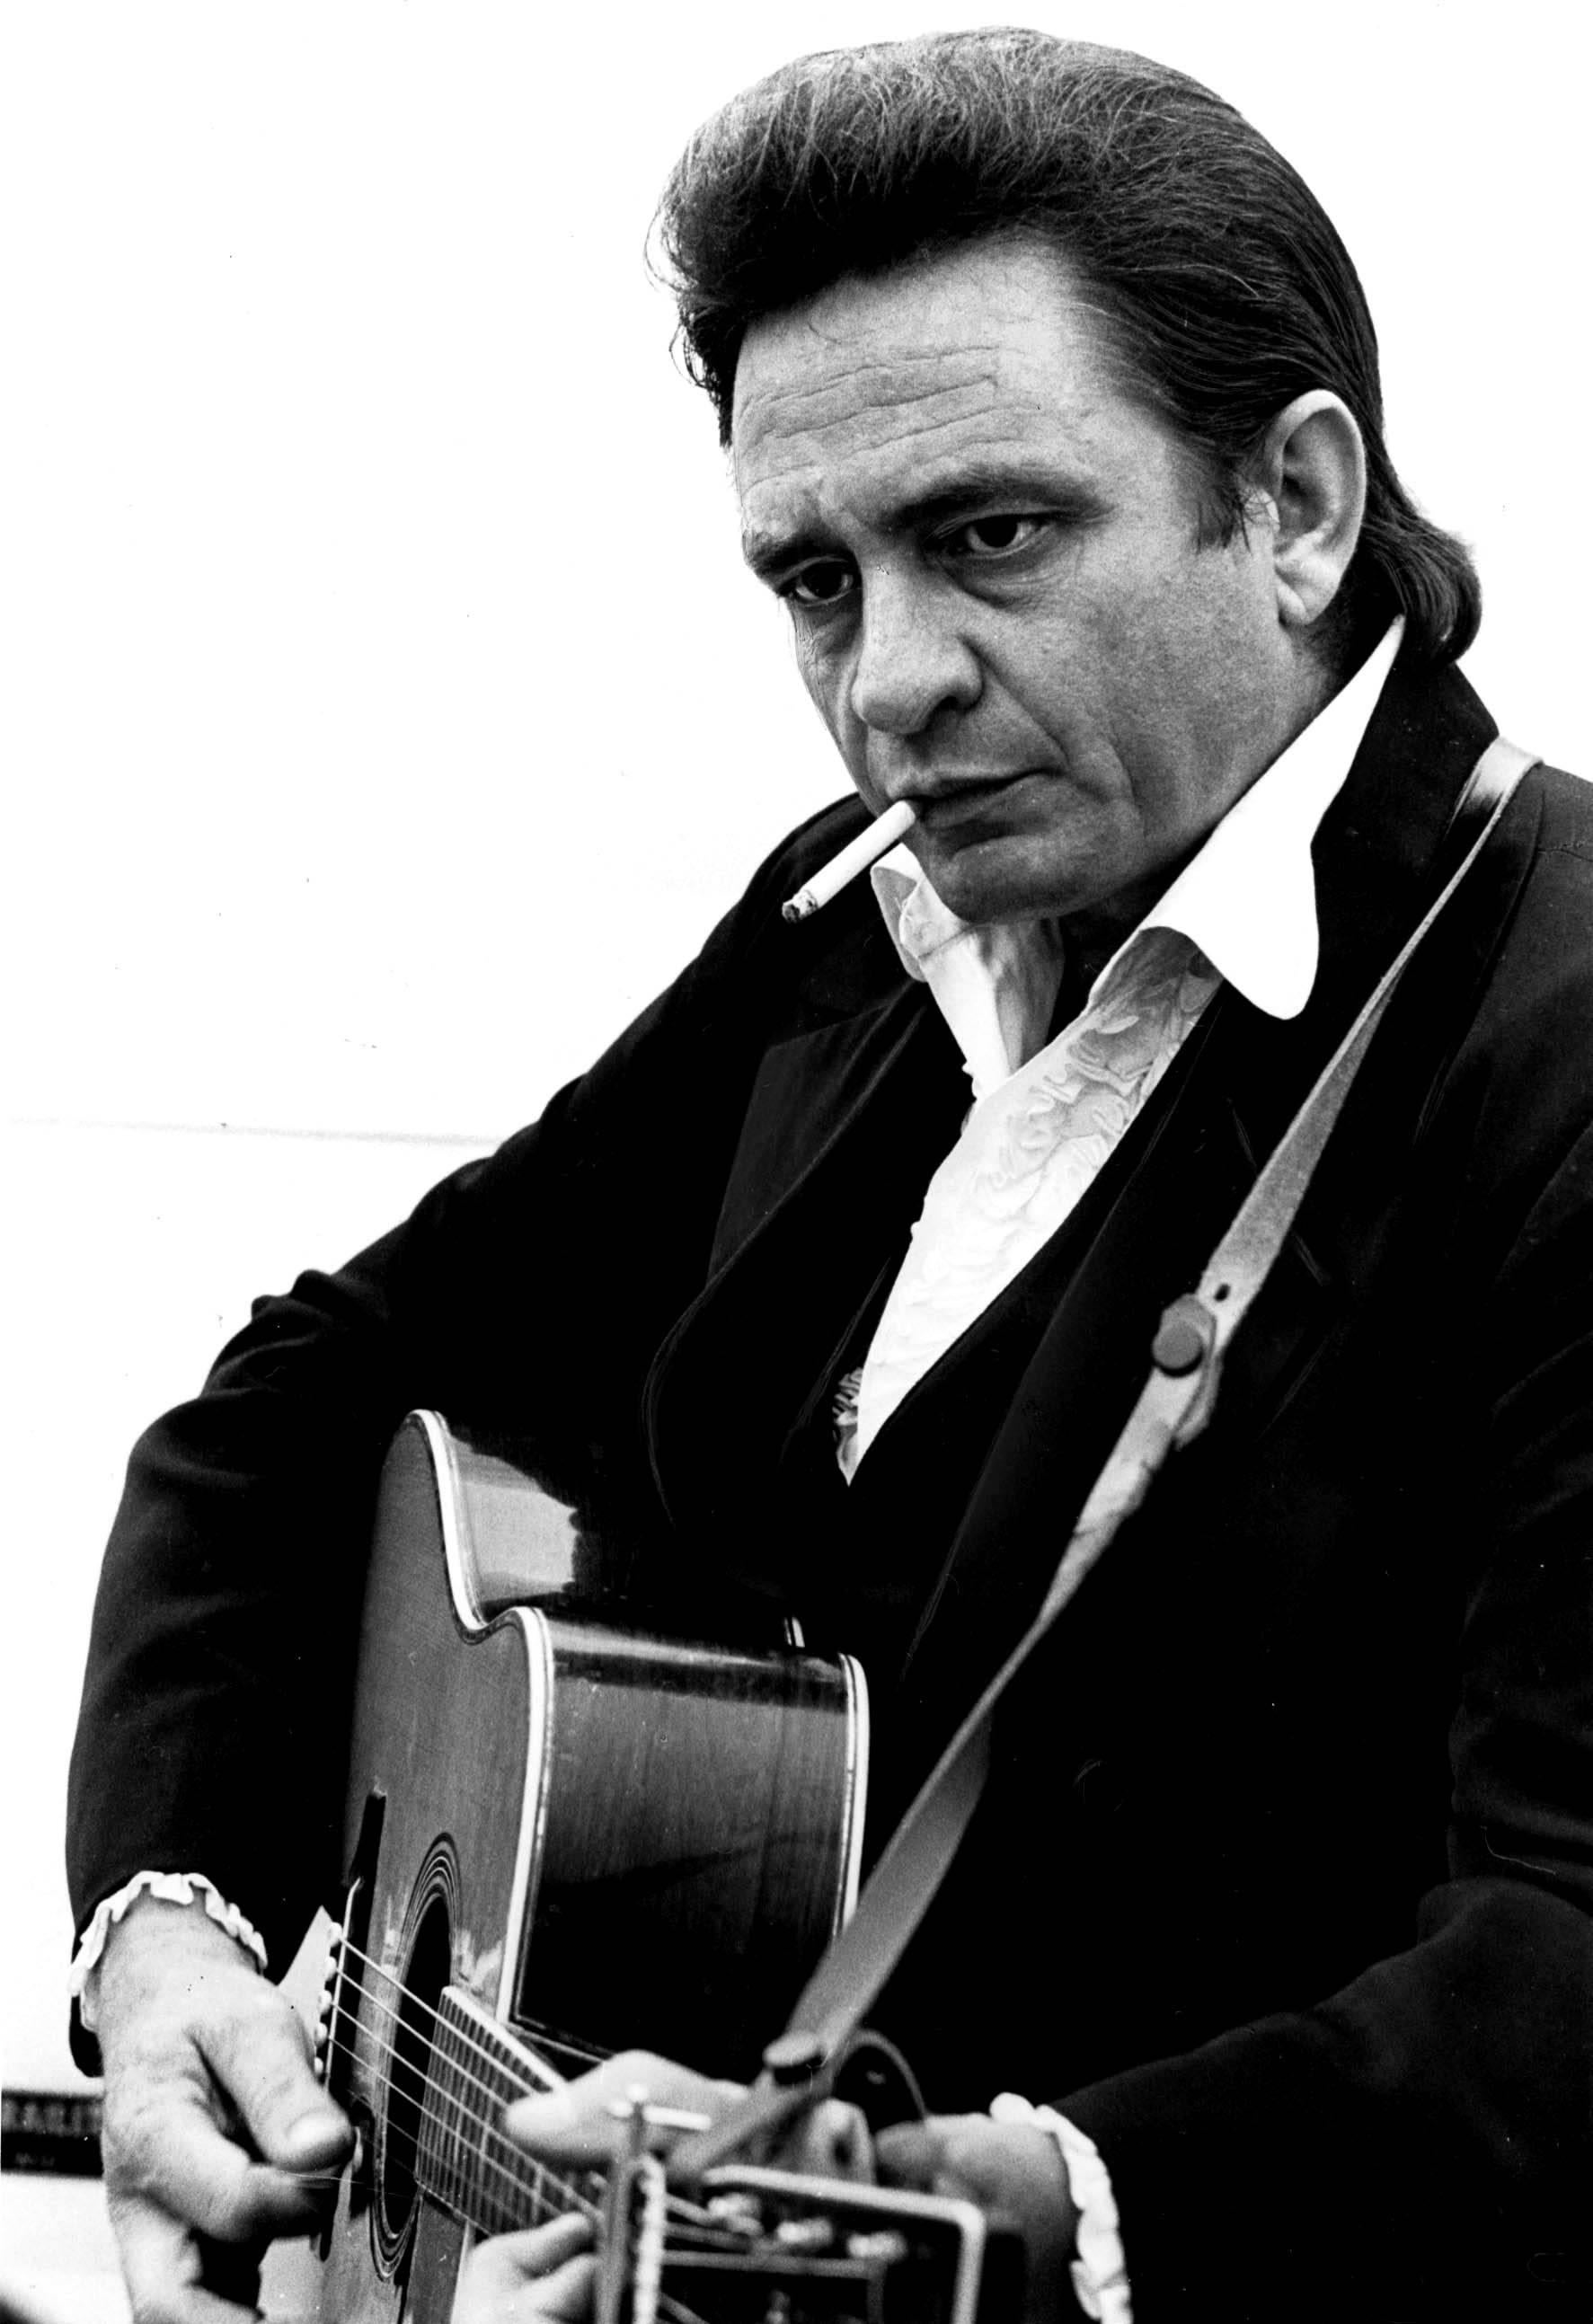 Unknown Portrait Photograph - Johnny Cash with Guitar and Cigarette Fine Art Print